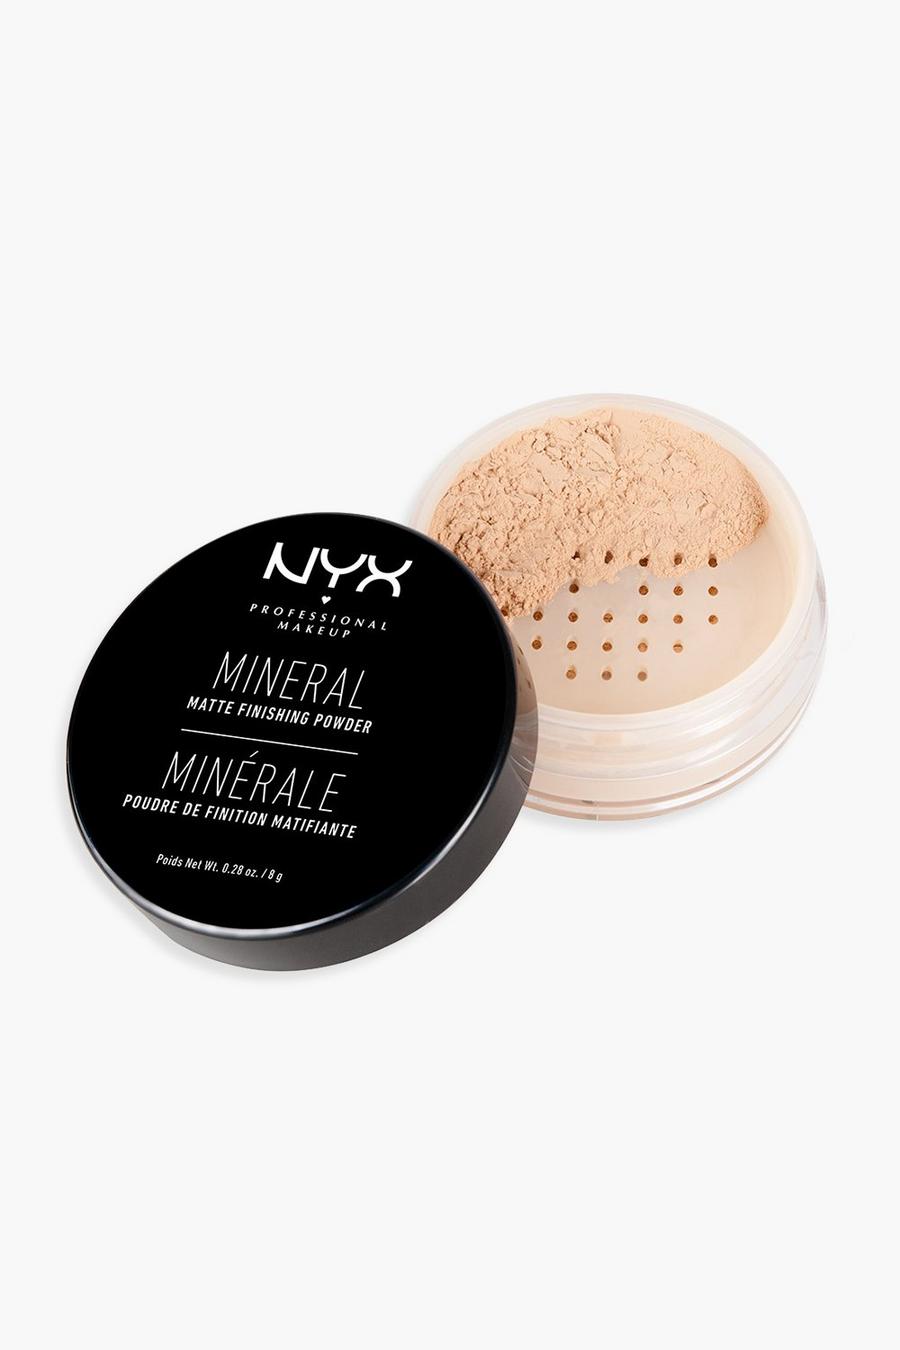 3-4 light medium NYX Professional Makeup Mineral Finishing Powder